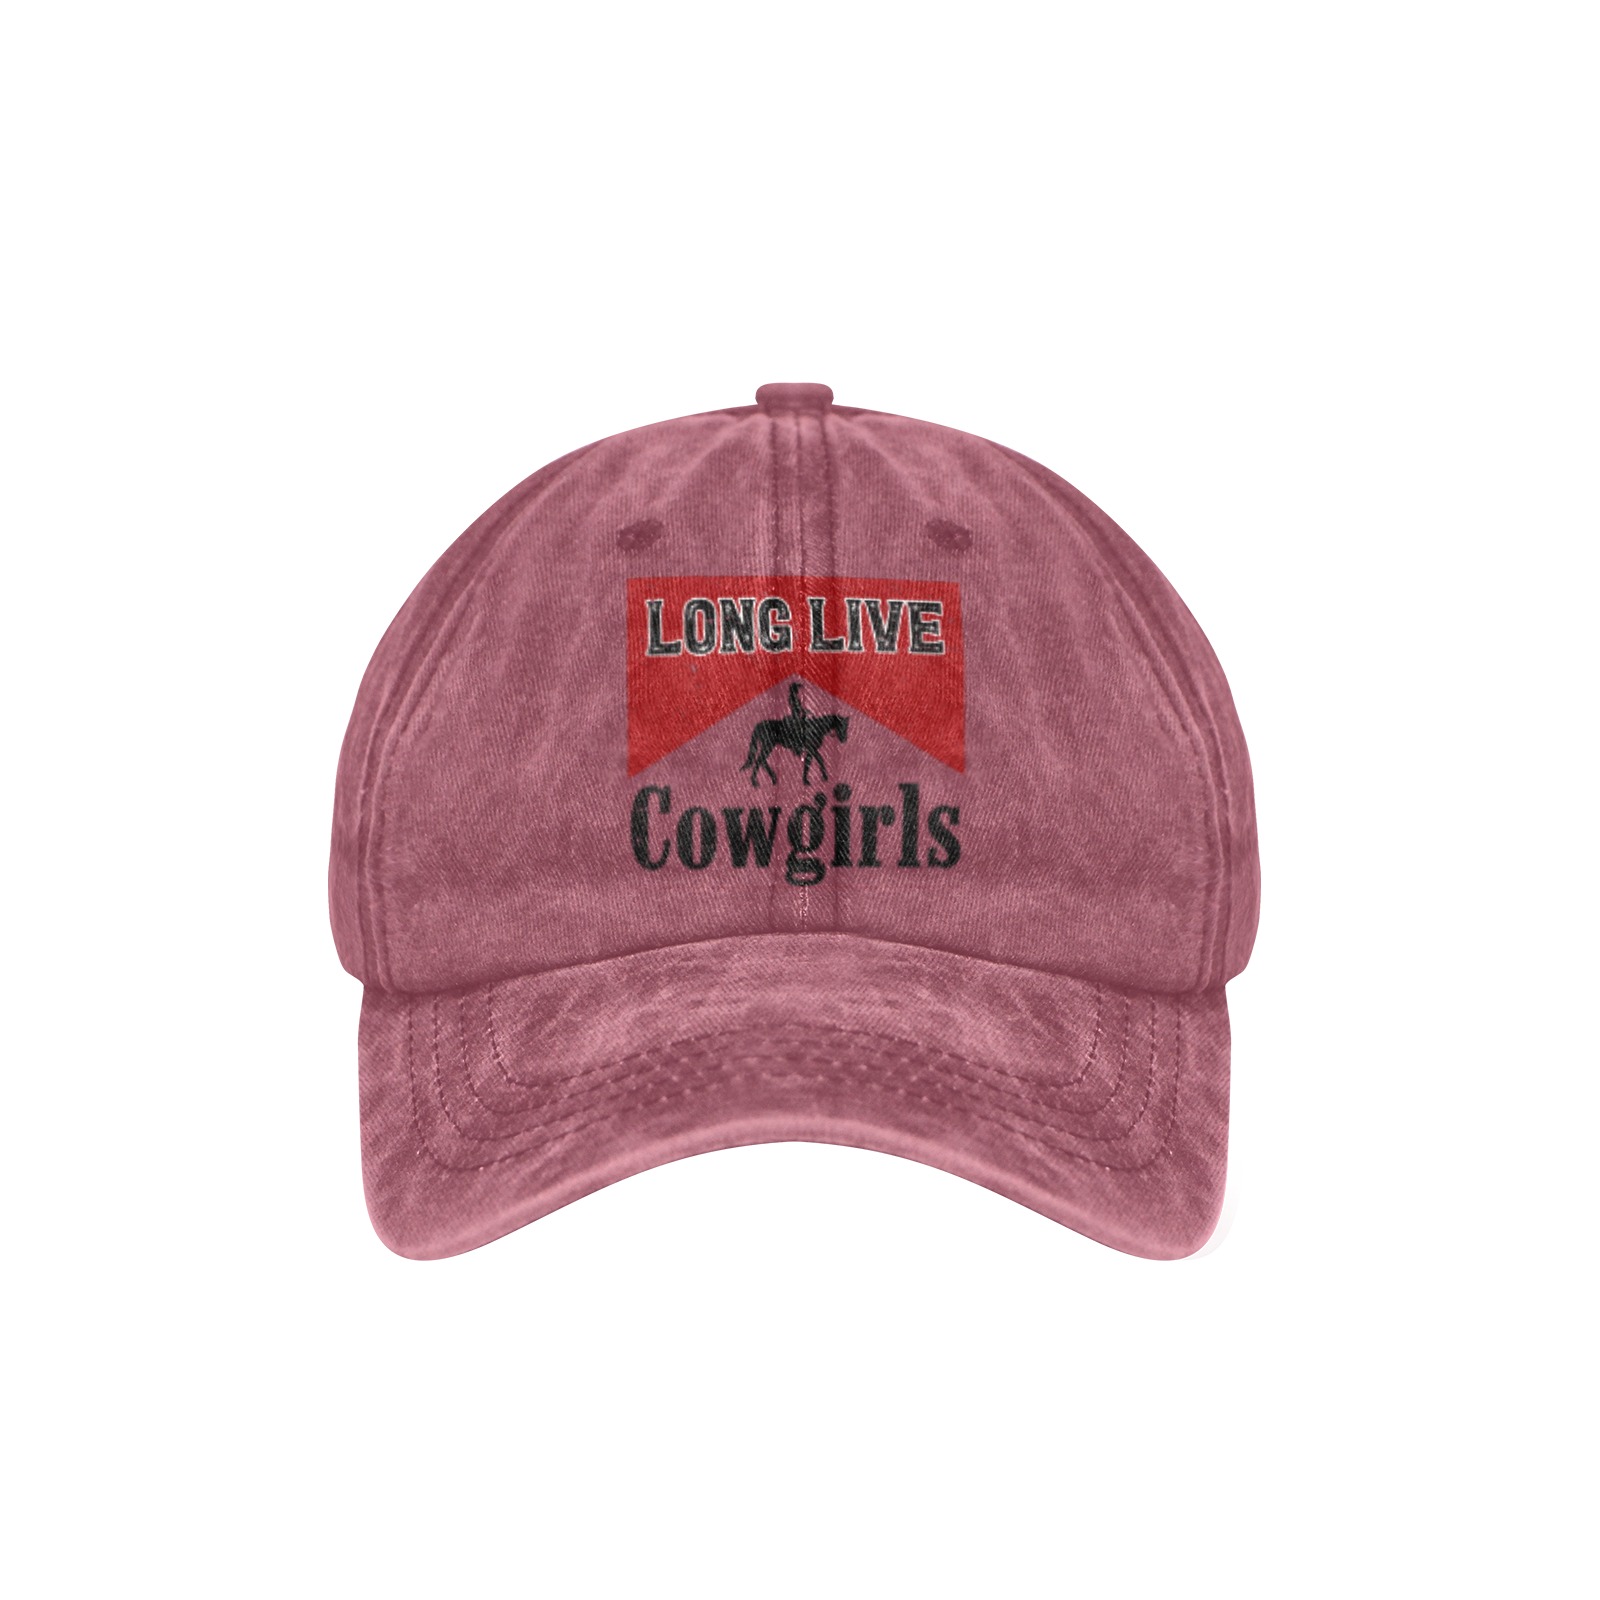 Long Live Cowgirls (R) Denim Cap